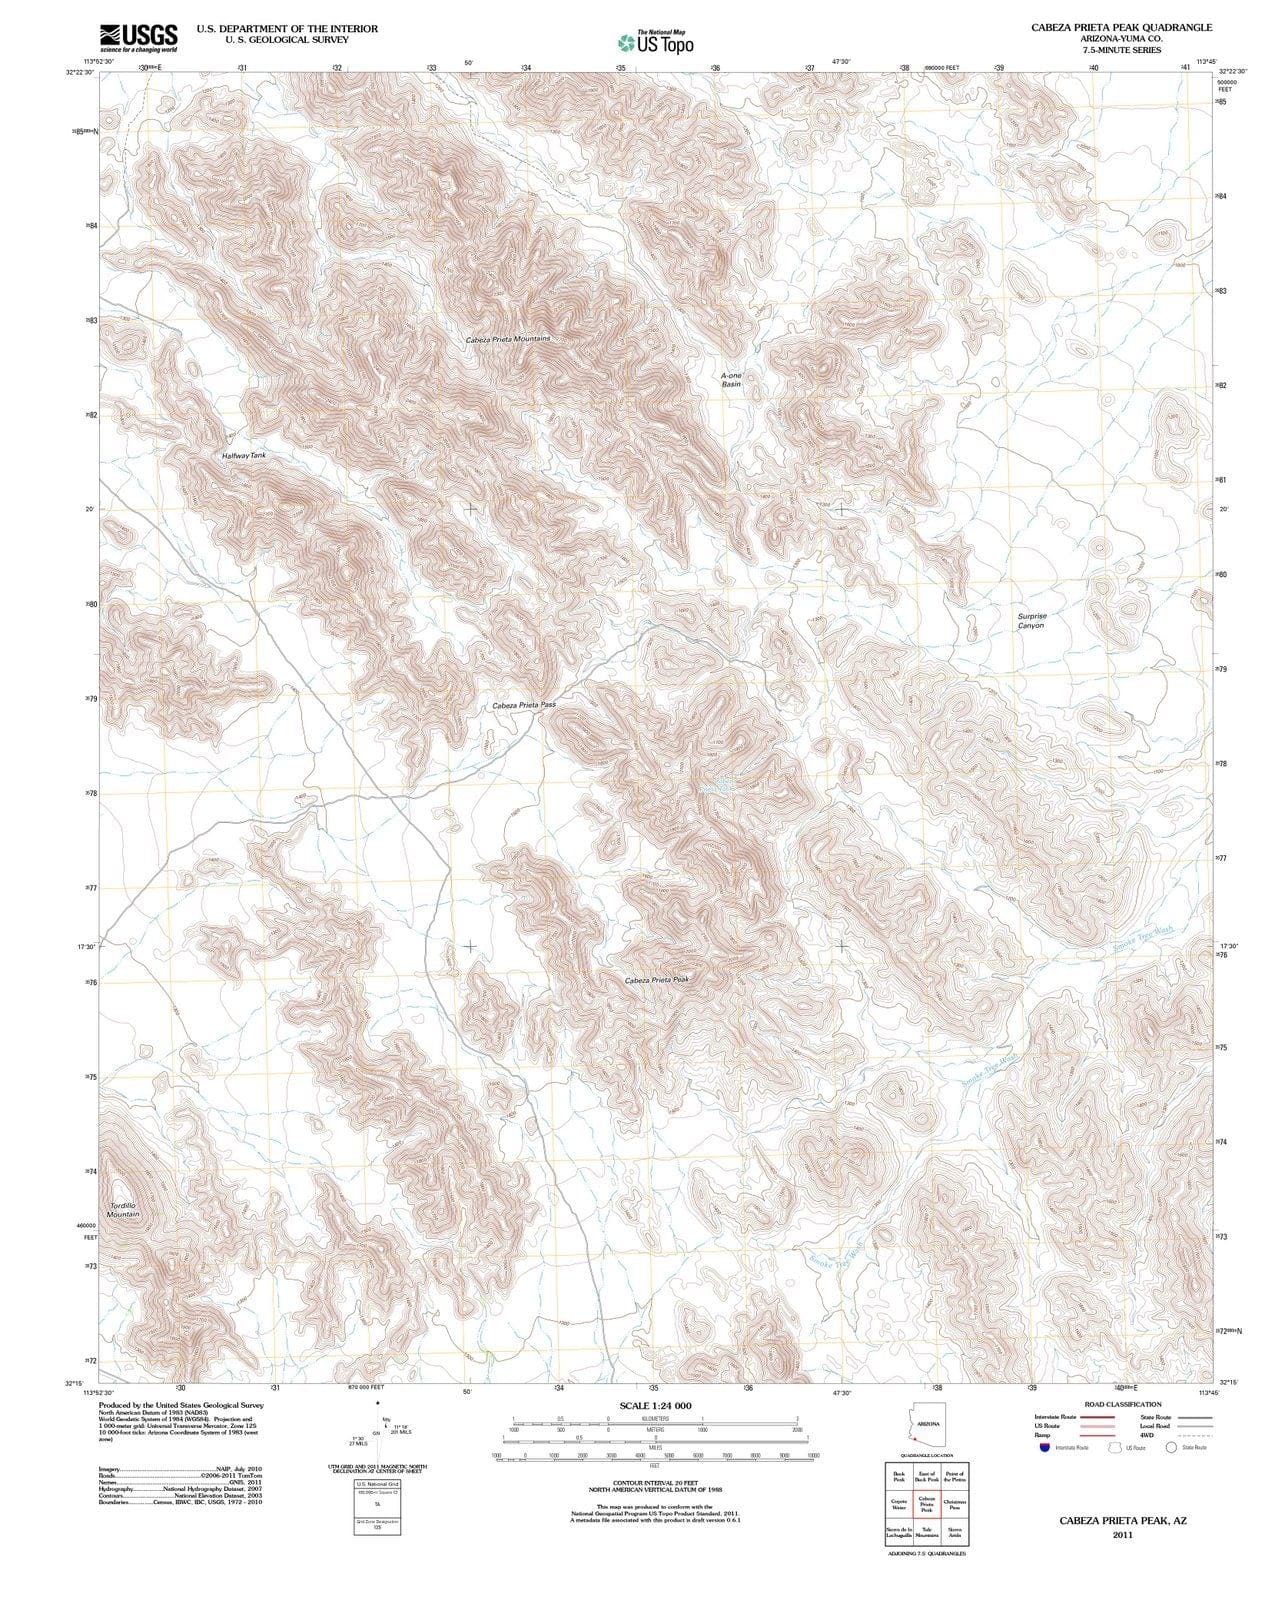 2011 Cabeza Prieta Peak, AZ - Arizona - USGS Topographic Map